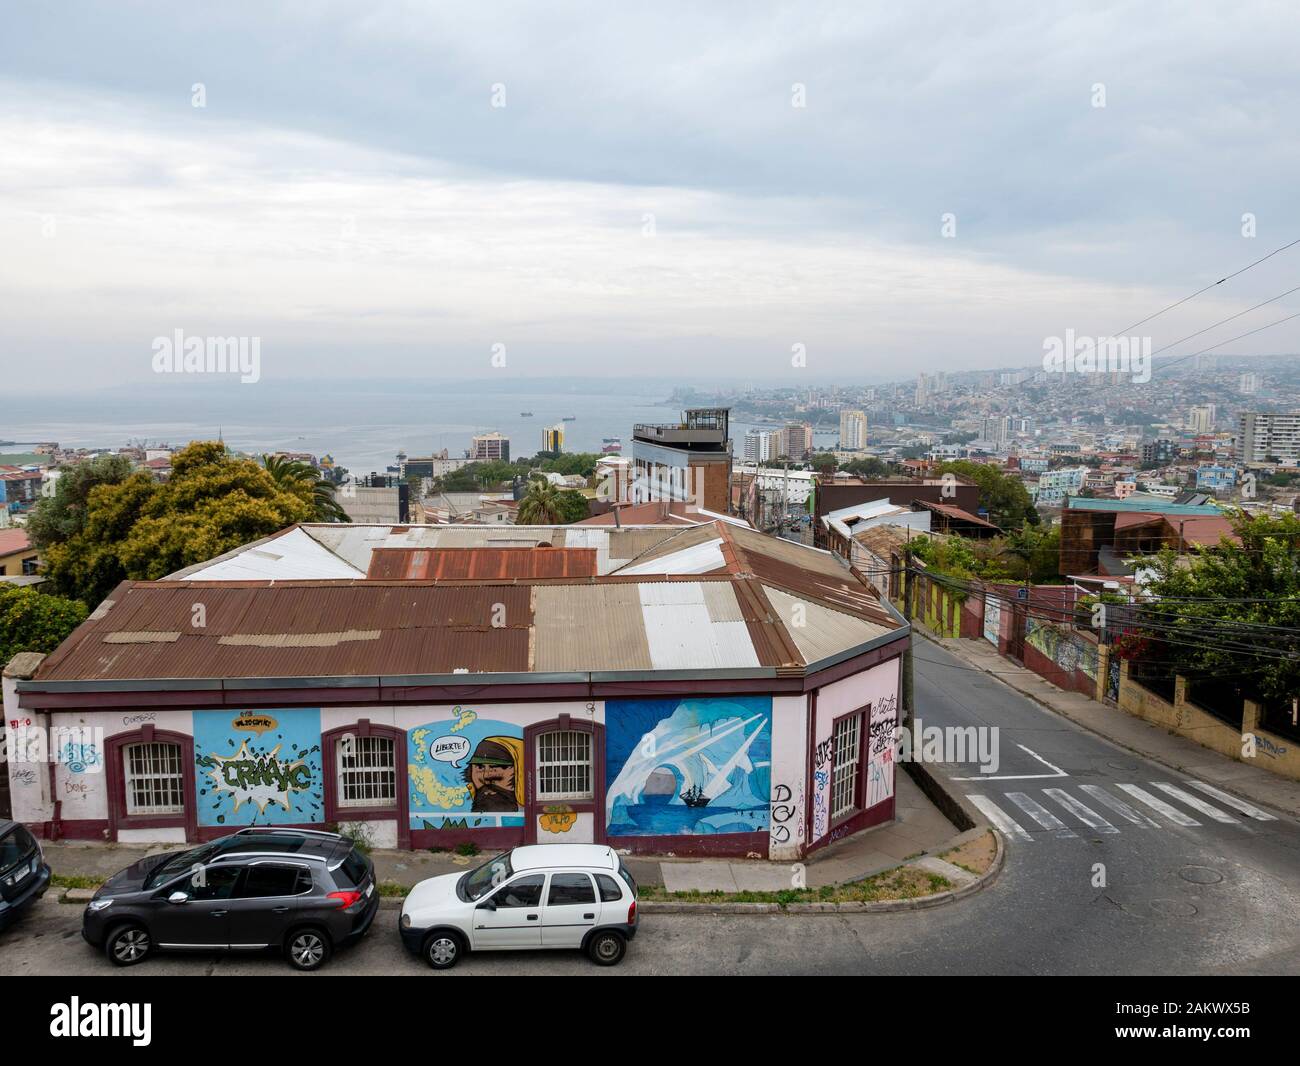 L'art de la rue, Valparaiso, Chili. Banque D'Images